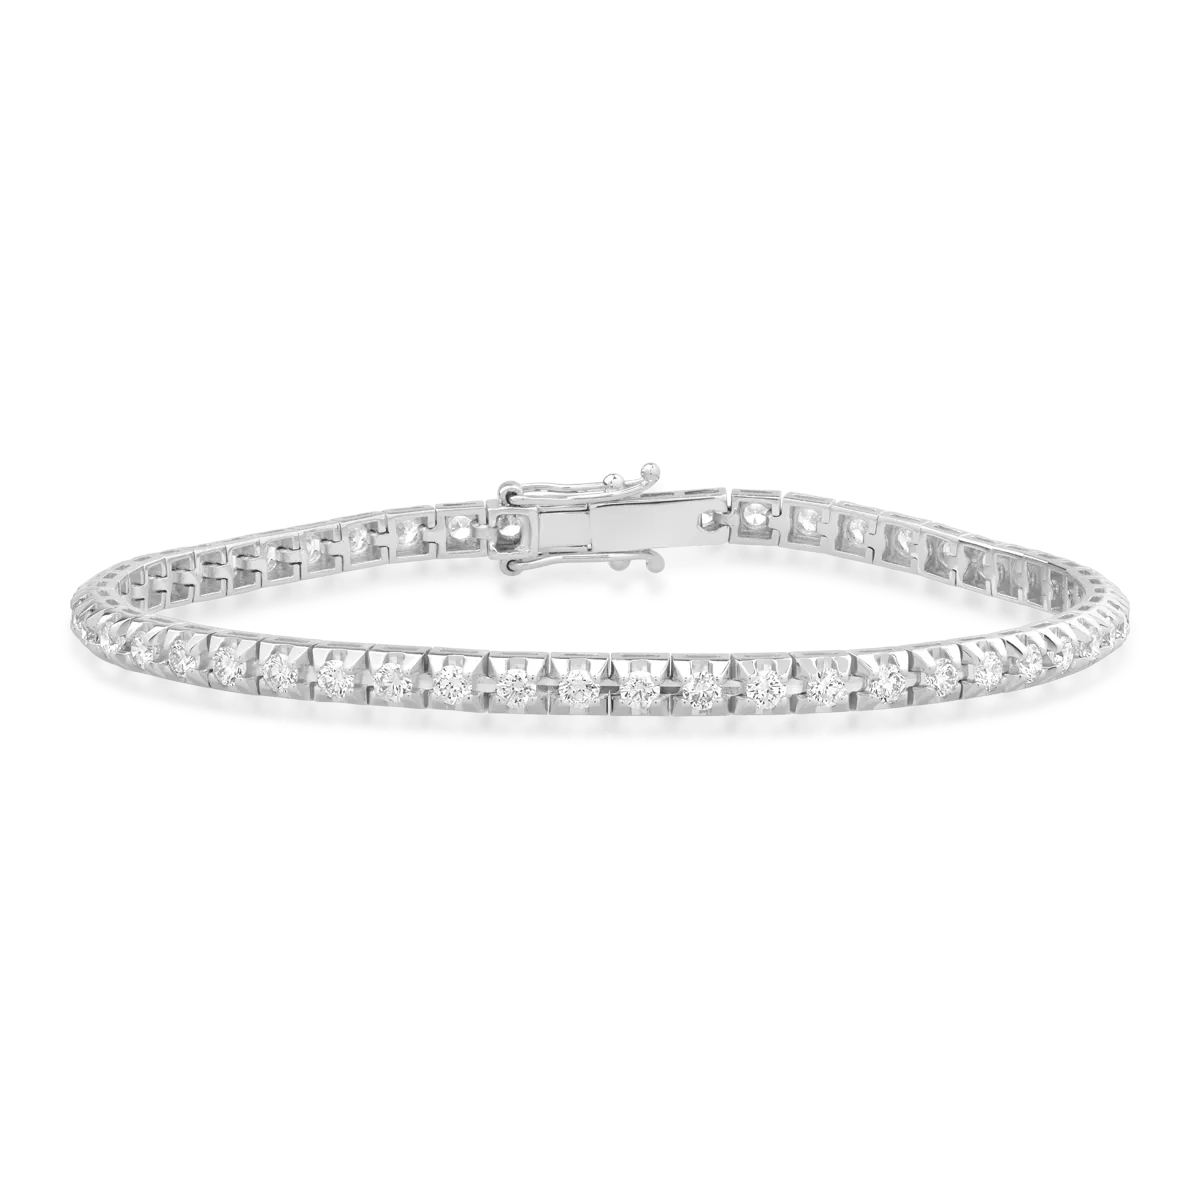 18K white gold tennis bracelet with 2ct diamonds